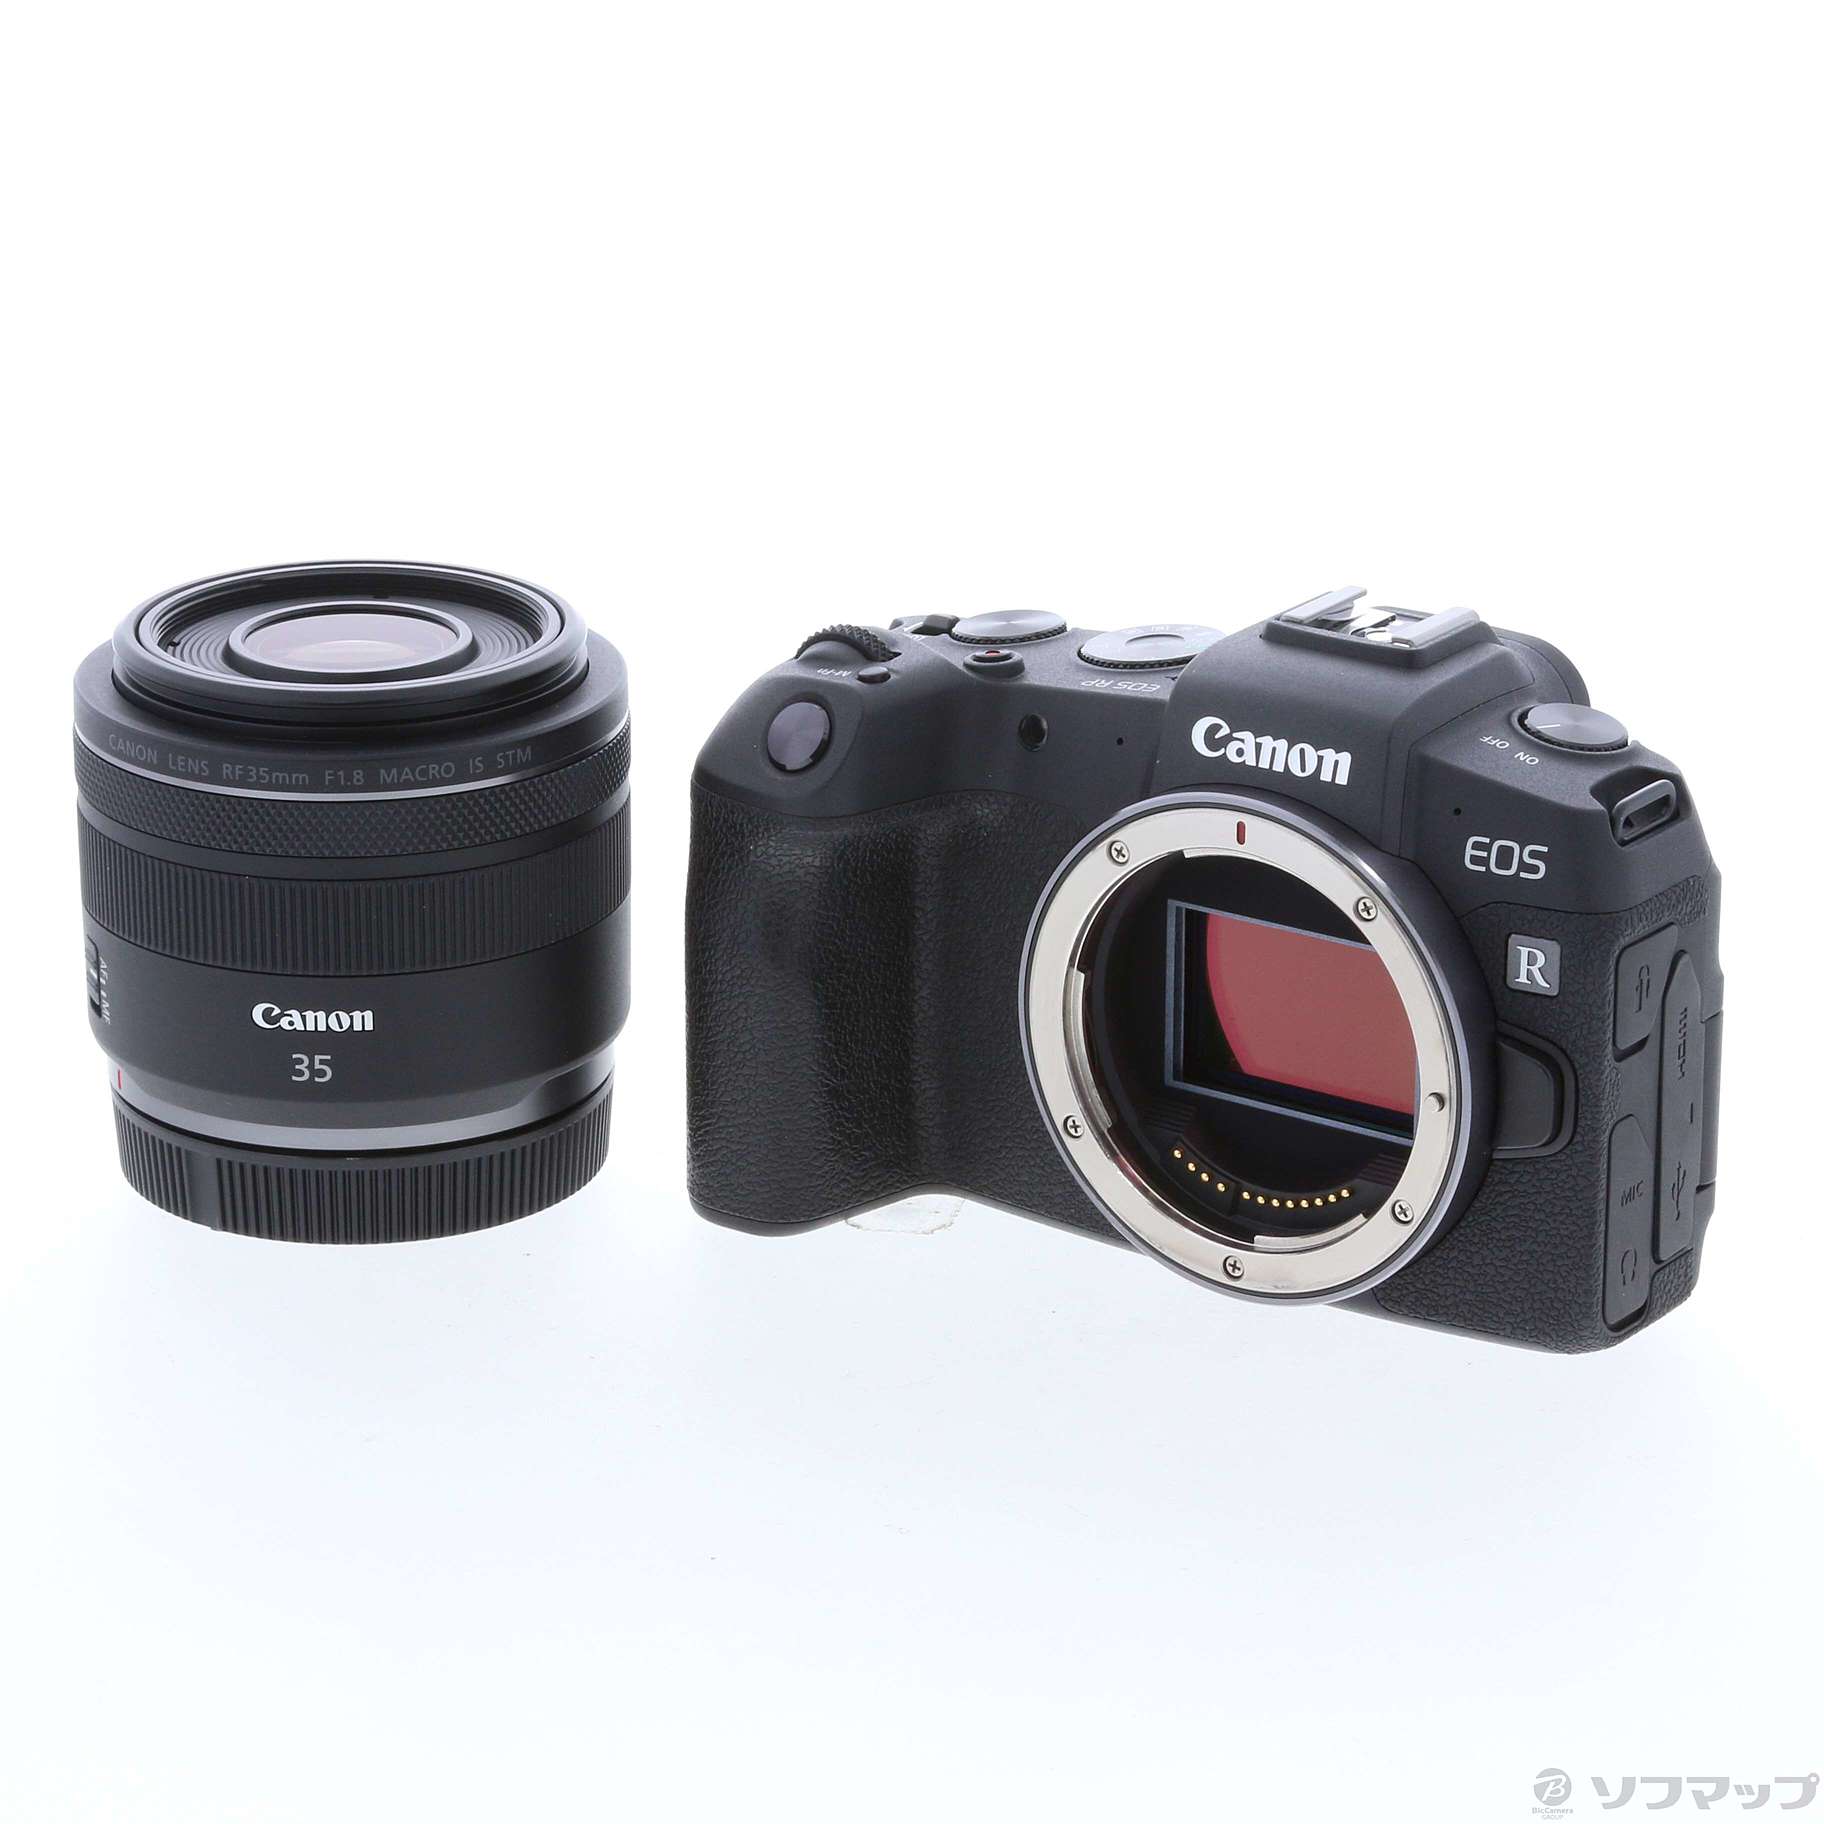 Canon (キヤノン) EOS RP RF35 MACRO IS STM レンズキット-